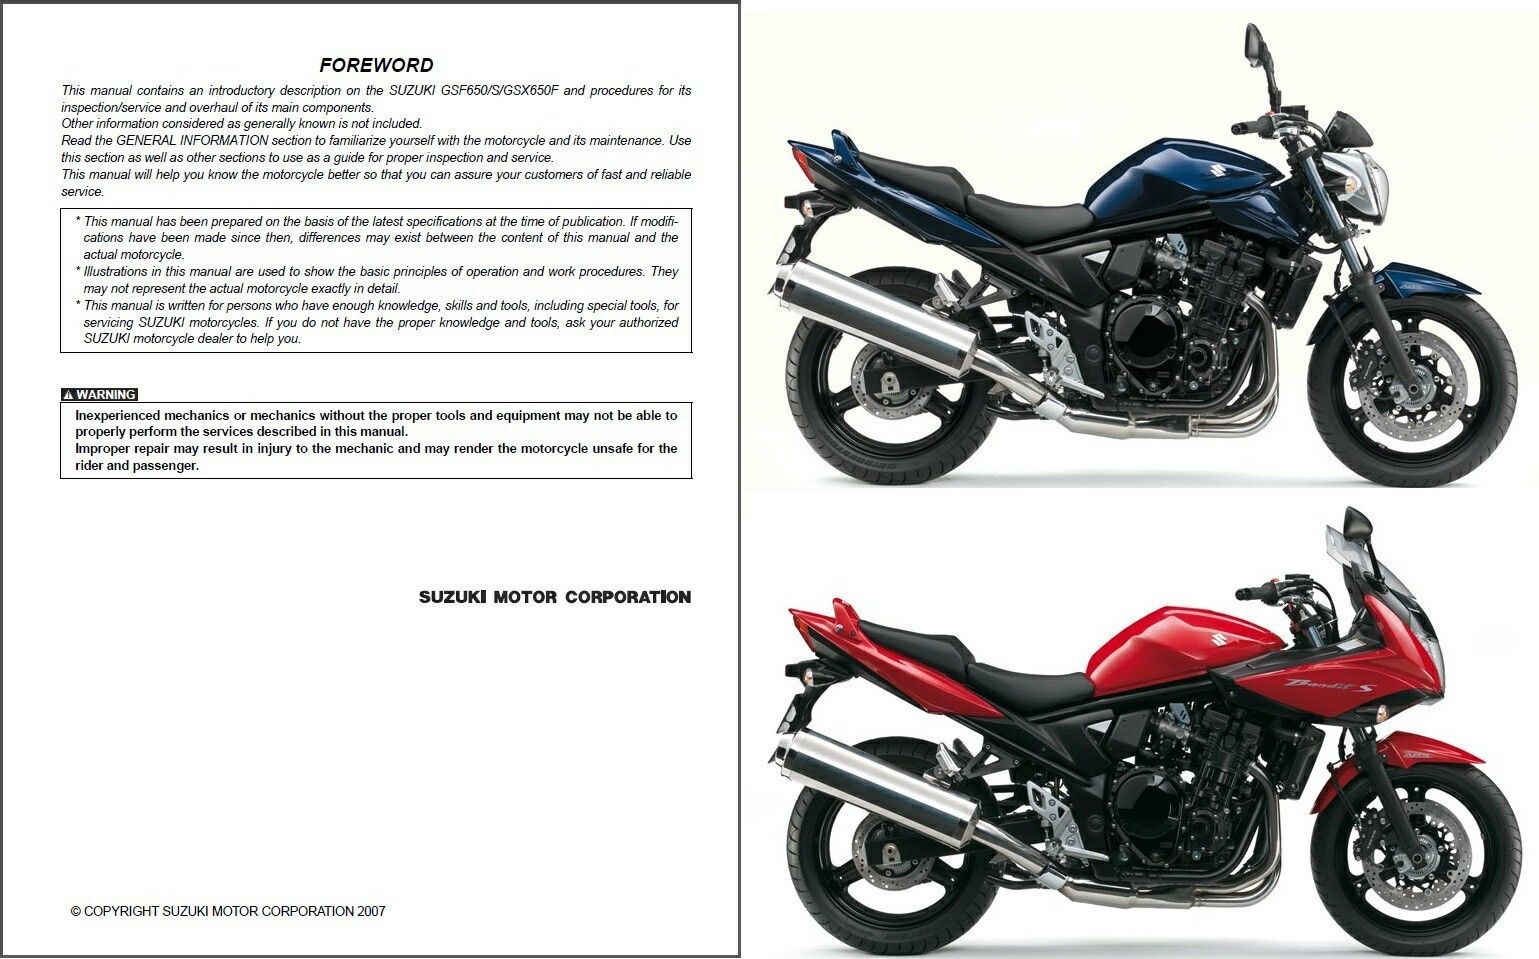 Suzuki gsf 650 bandit: отзывы и технические характеристики, фото